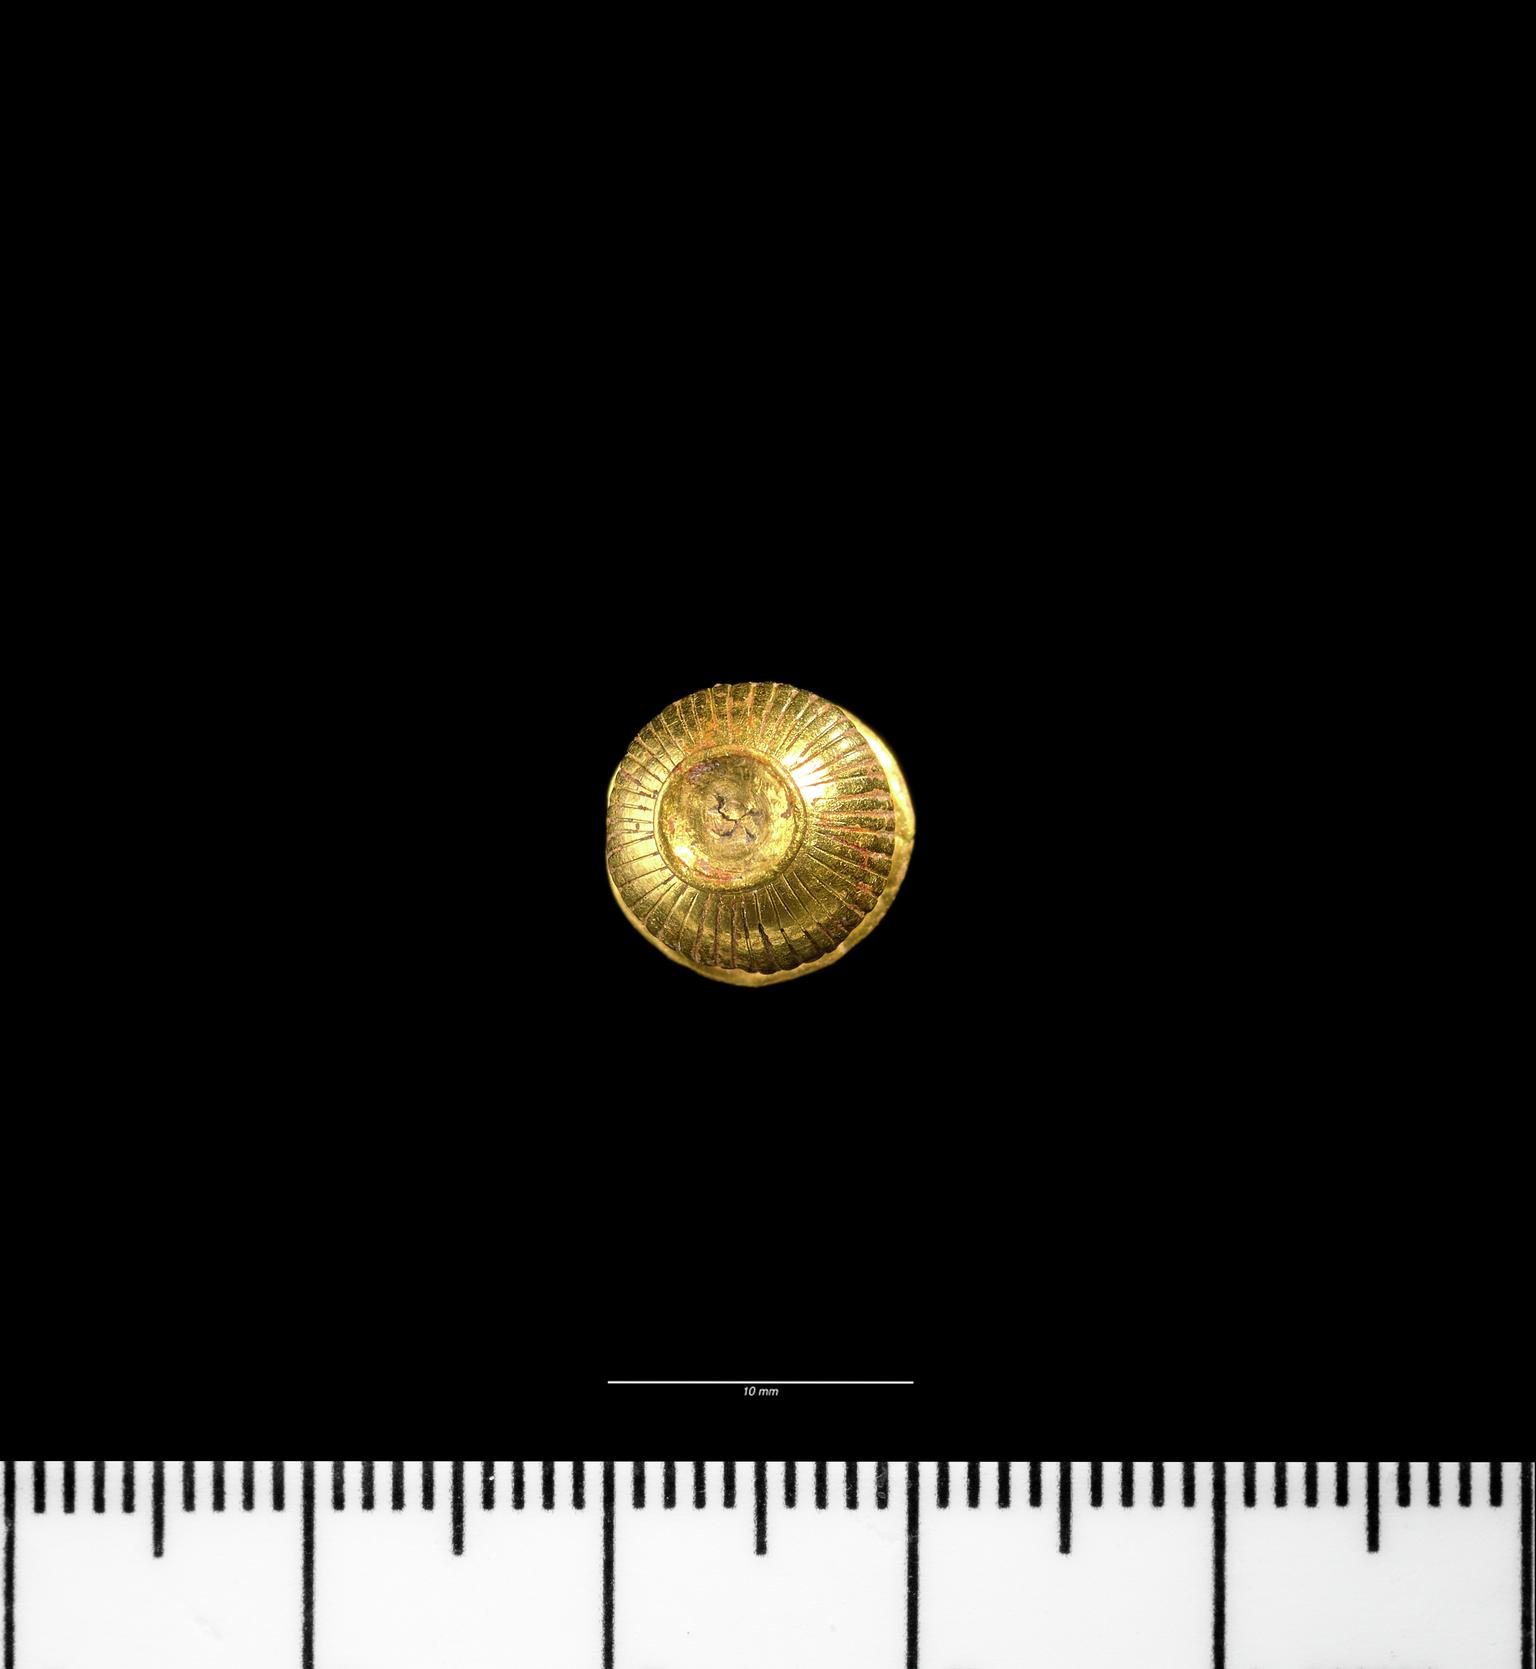 Roman gold pendant